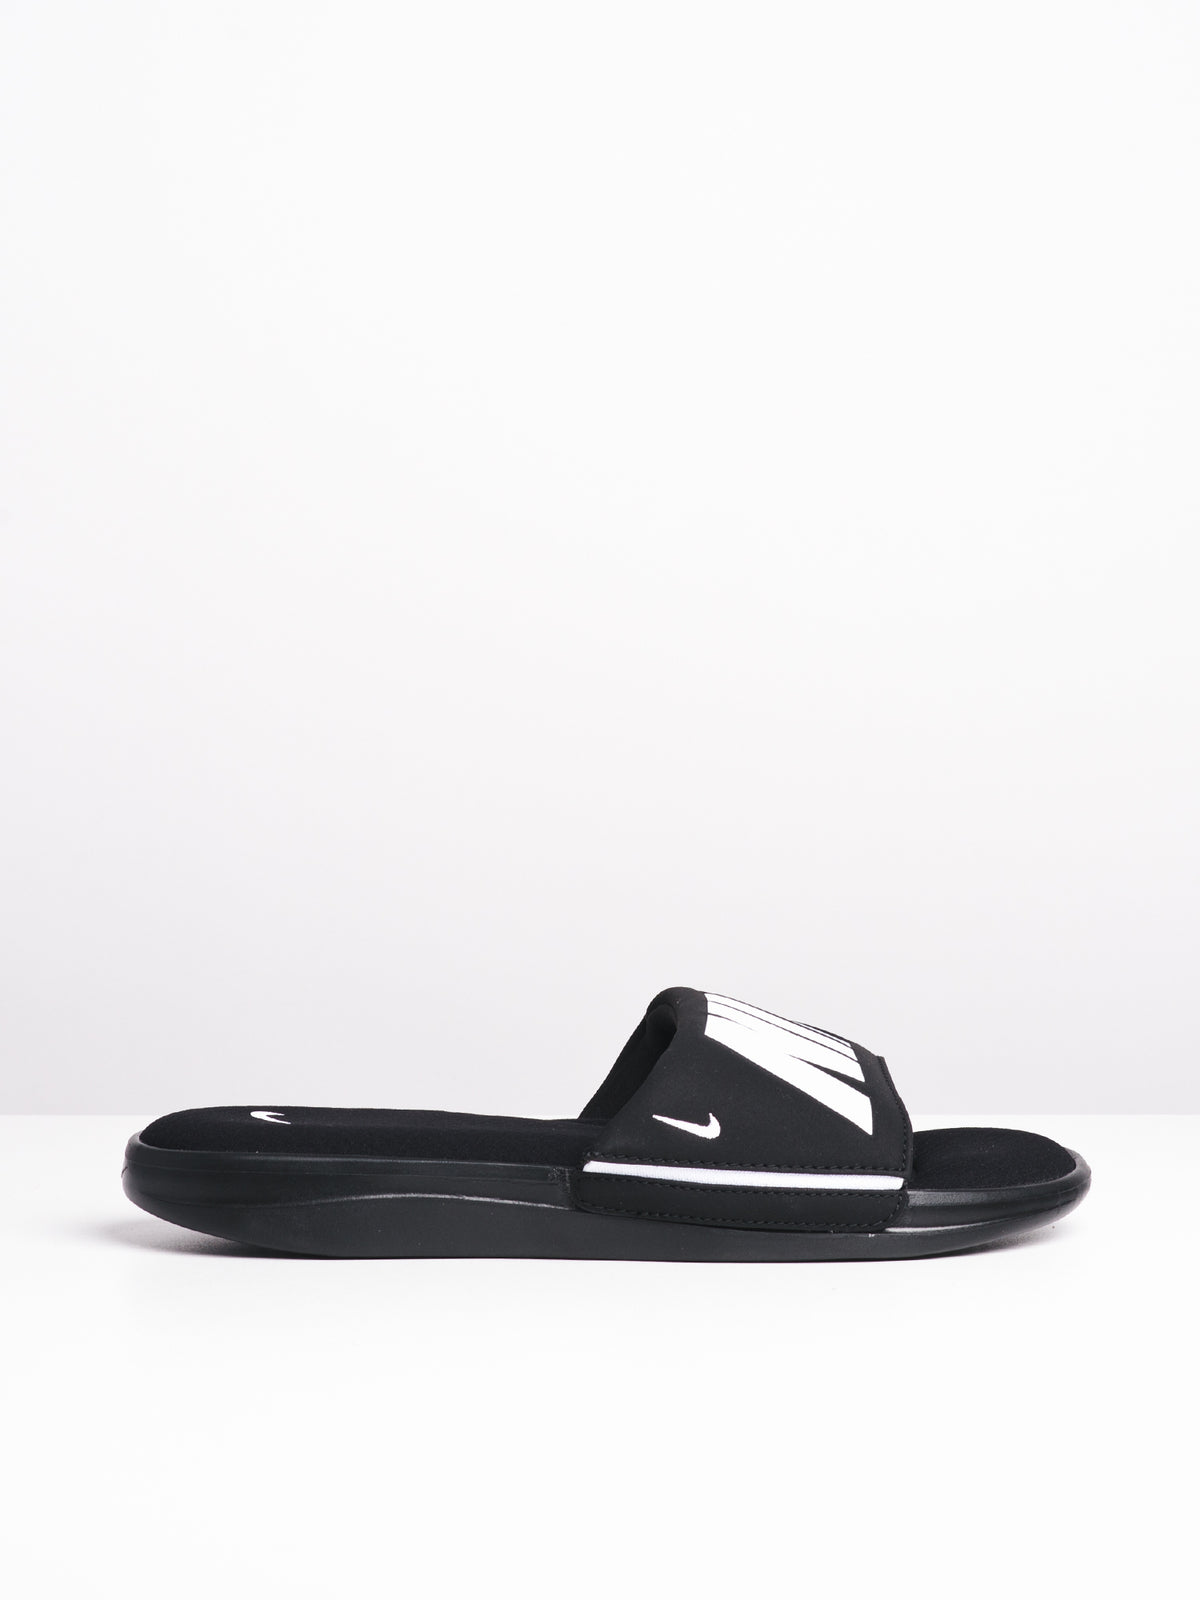 Nike Ultra Comfort 3 Flip Flops in Black